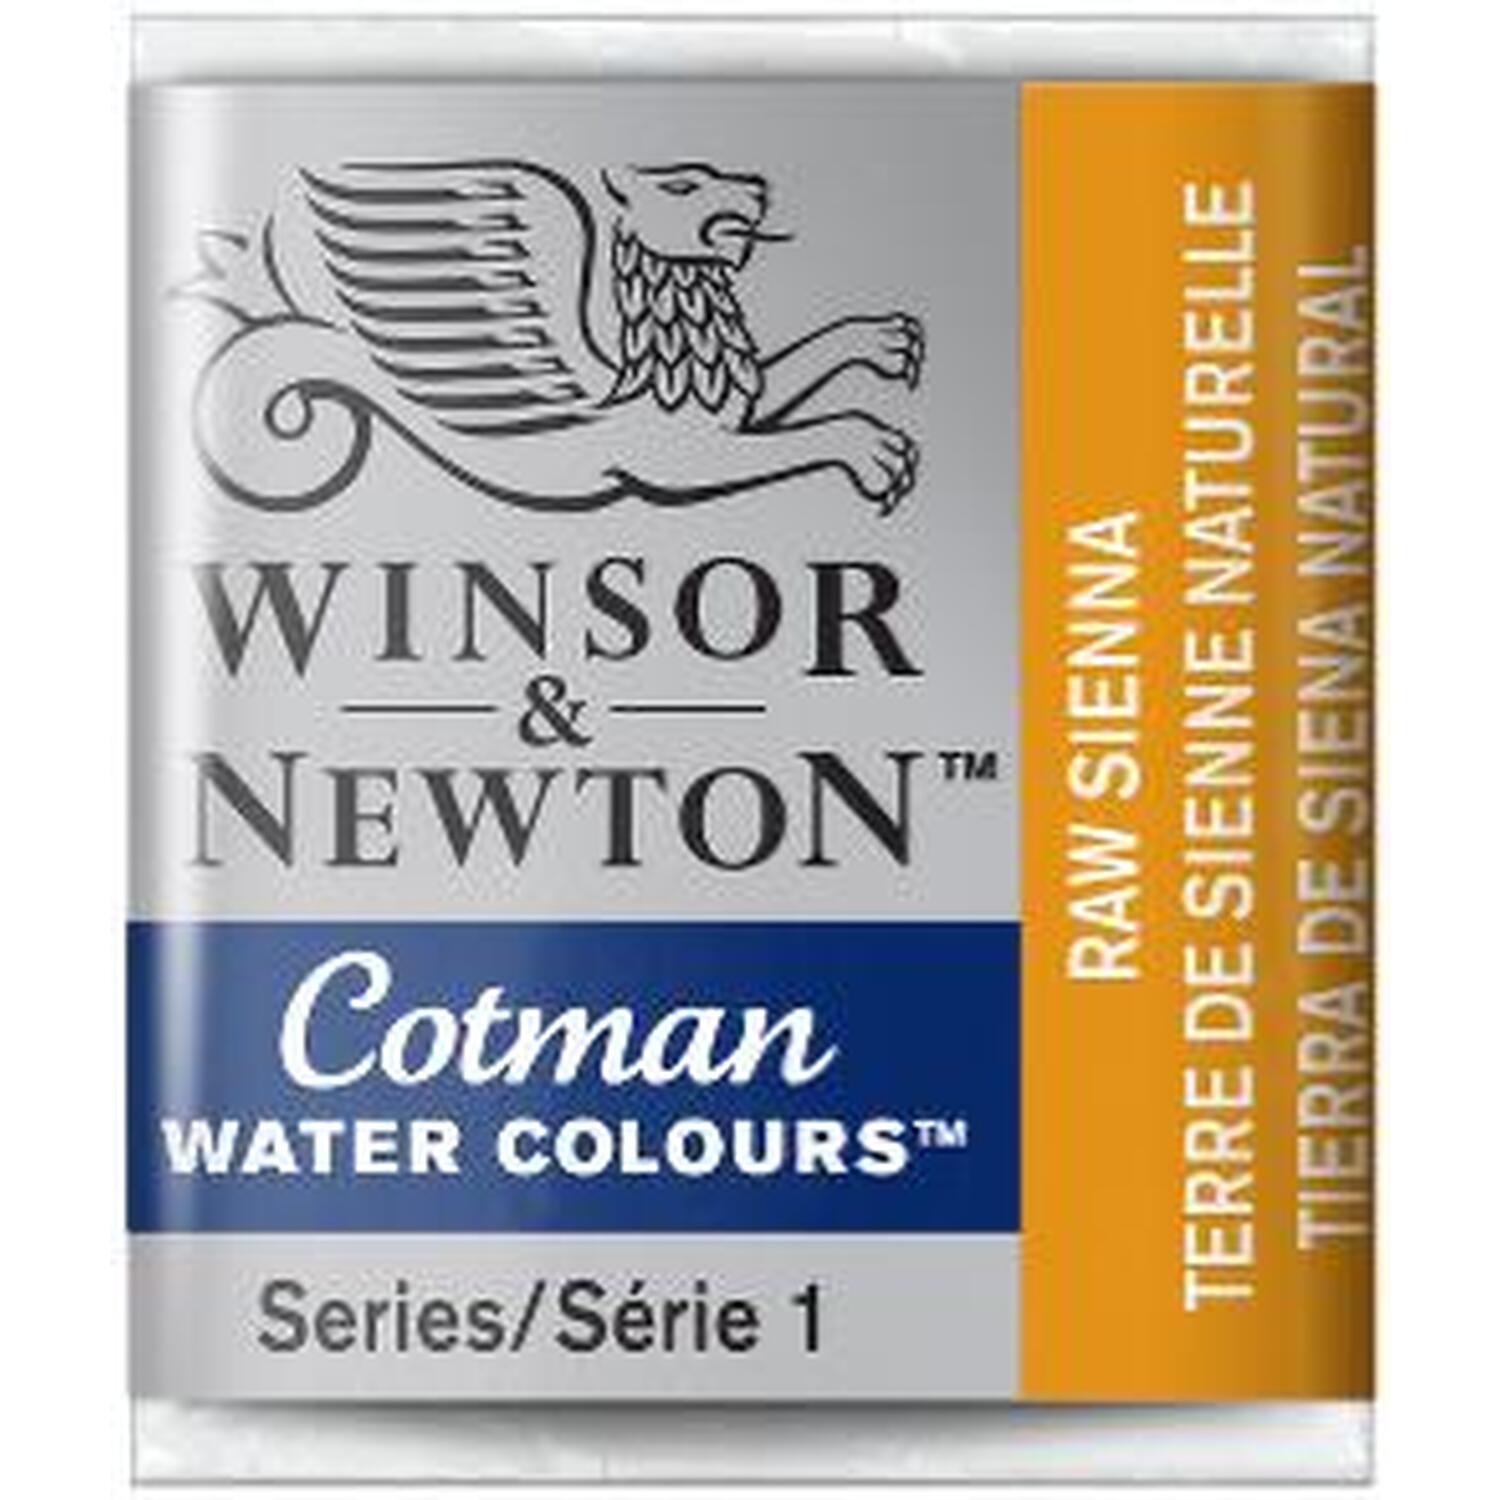 Winsor and Newton Cotman Watercolour Half Pan Paint - Raw Sienna Image